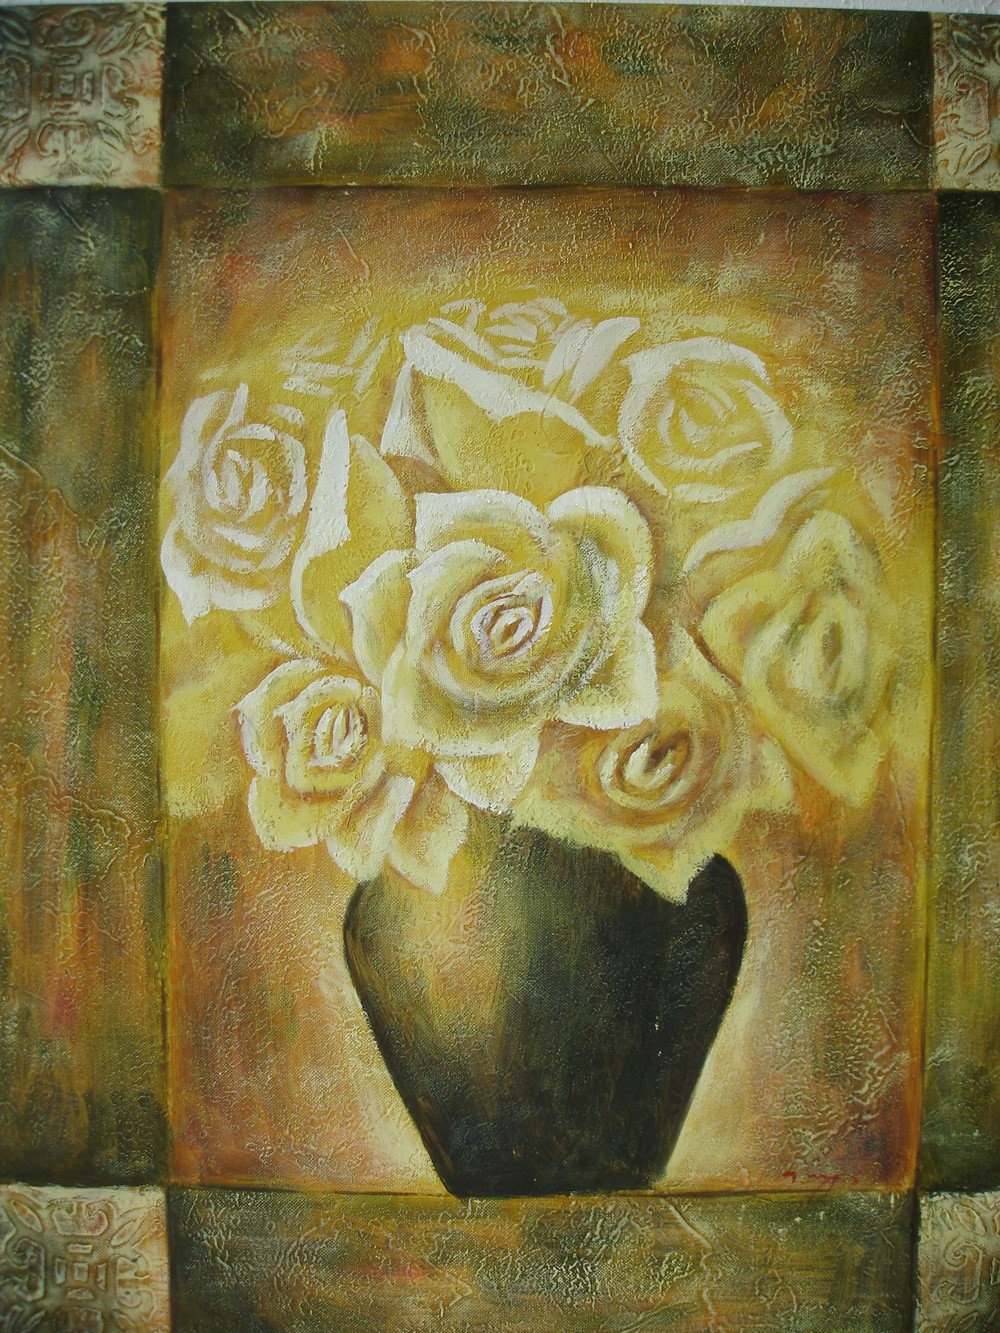 Ölgemälde auf Keilrahmen 50x60 cm Rosen, handgemalt